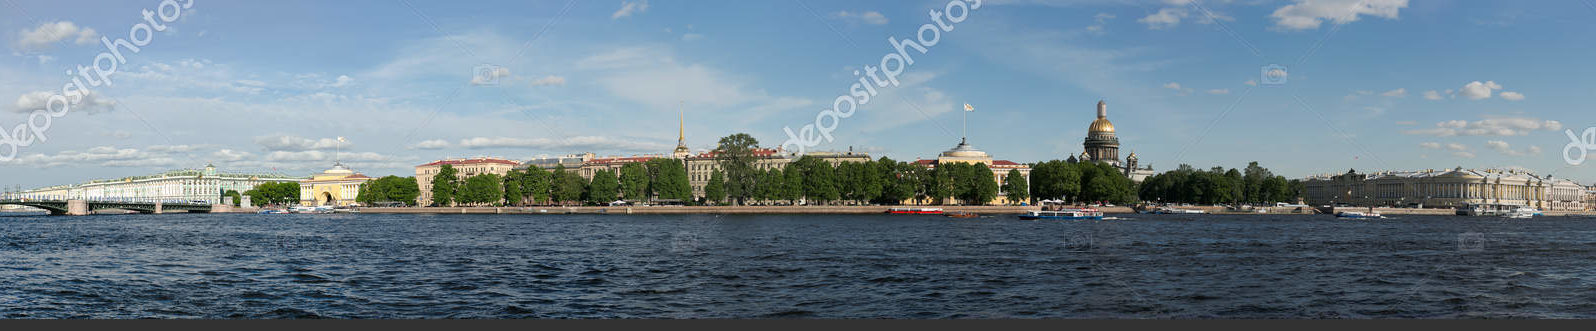 Санкт-Петербург. Панорама набережной